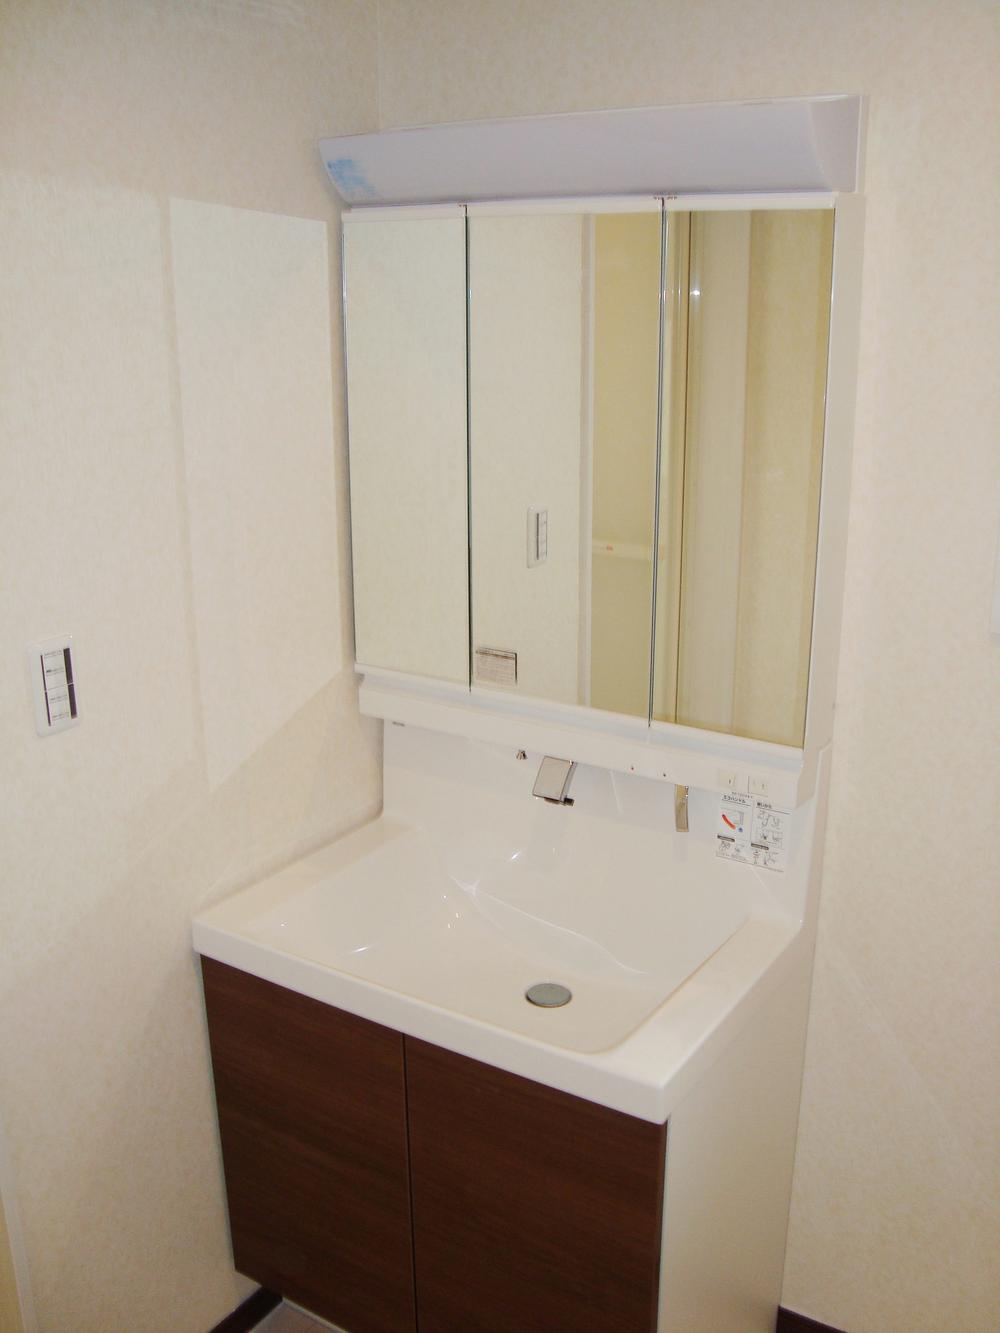 Wash basin, toilet. C Building washbasin room (March 2013) Shooting